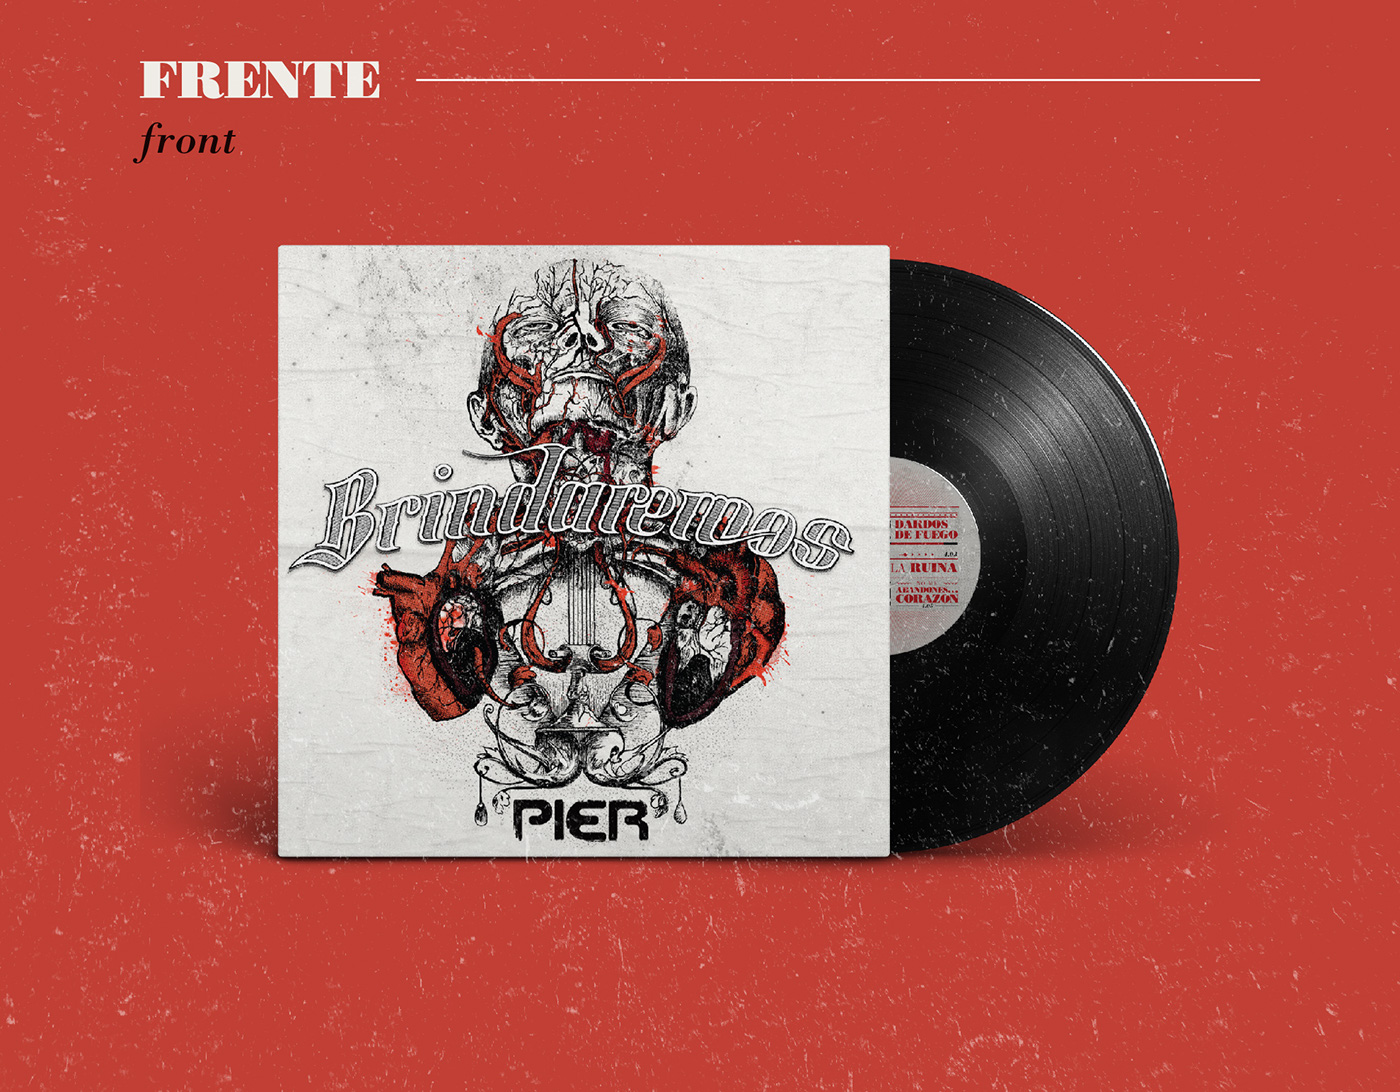 musica pier rock nacional argentina Album fadu descontrol Rock And Roll Beatles rolling stones guitar vinyl vinilo